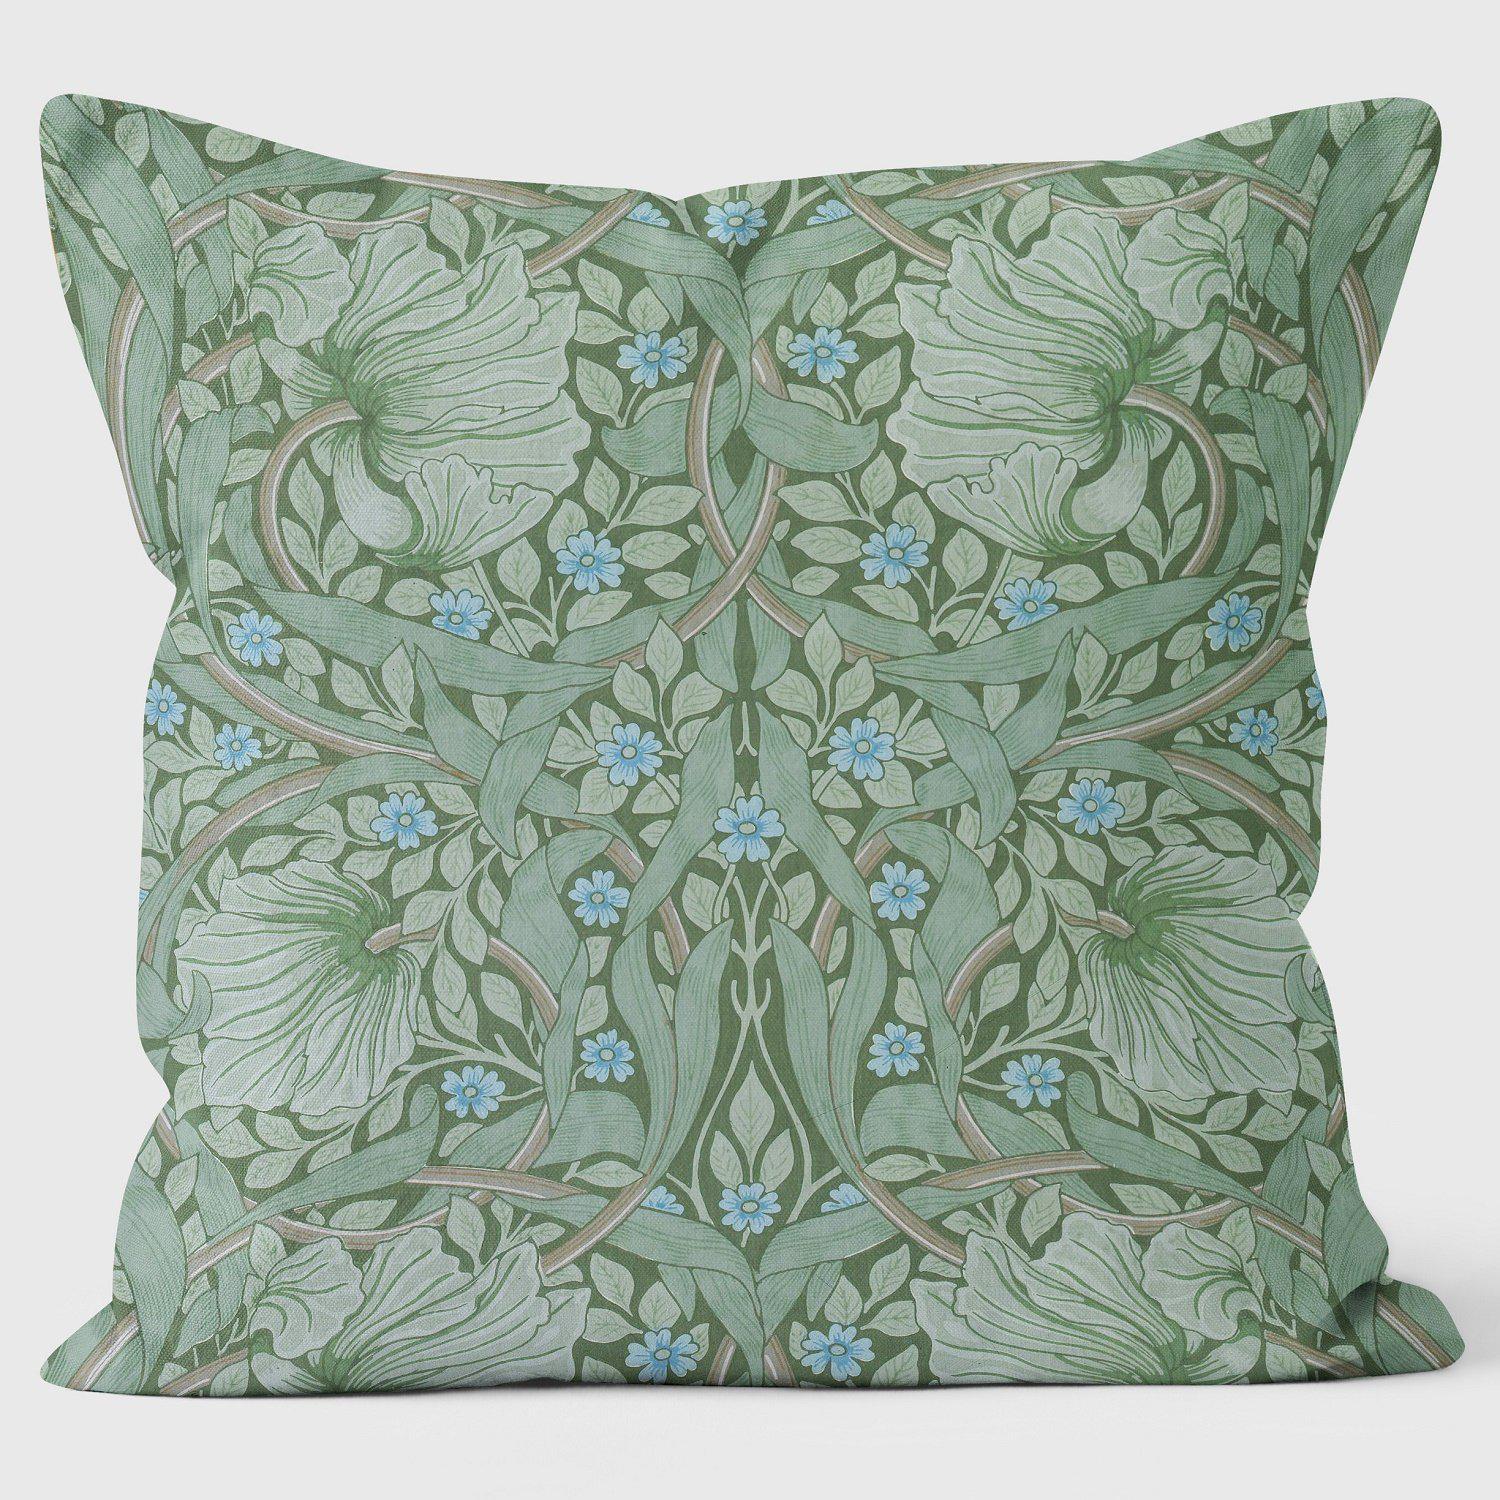 Pimpernel - William Morris Cushion - Handmade Cushions UK - WeLoveCushions